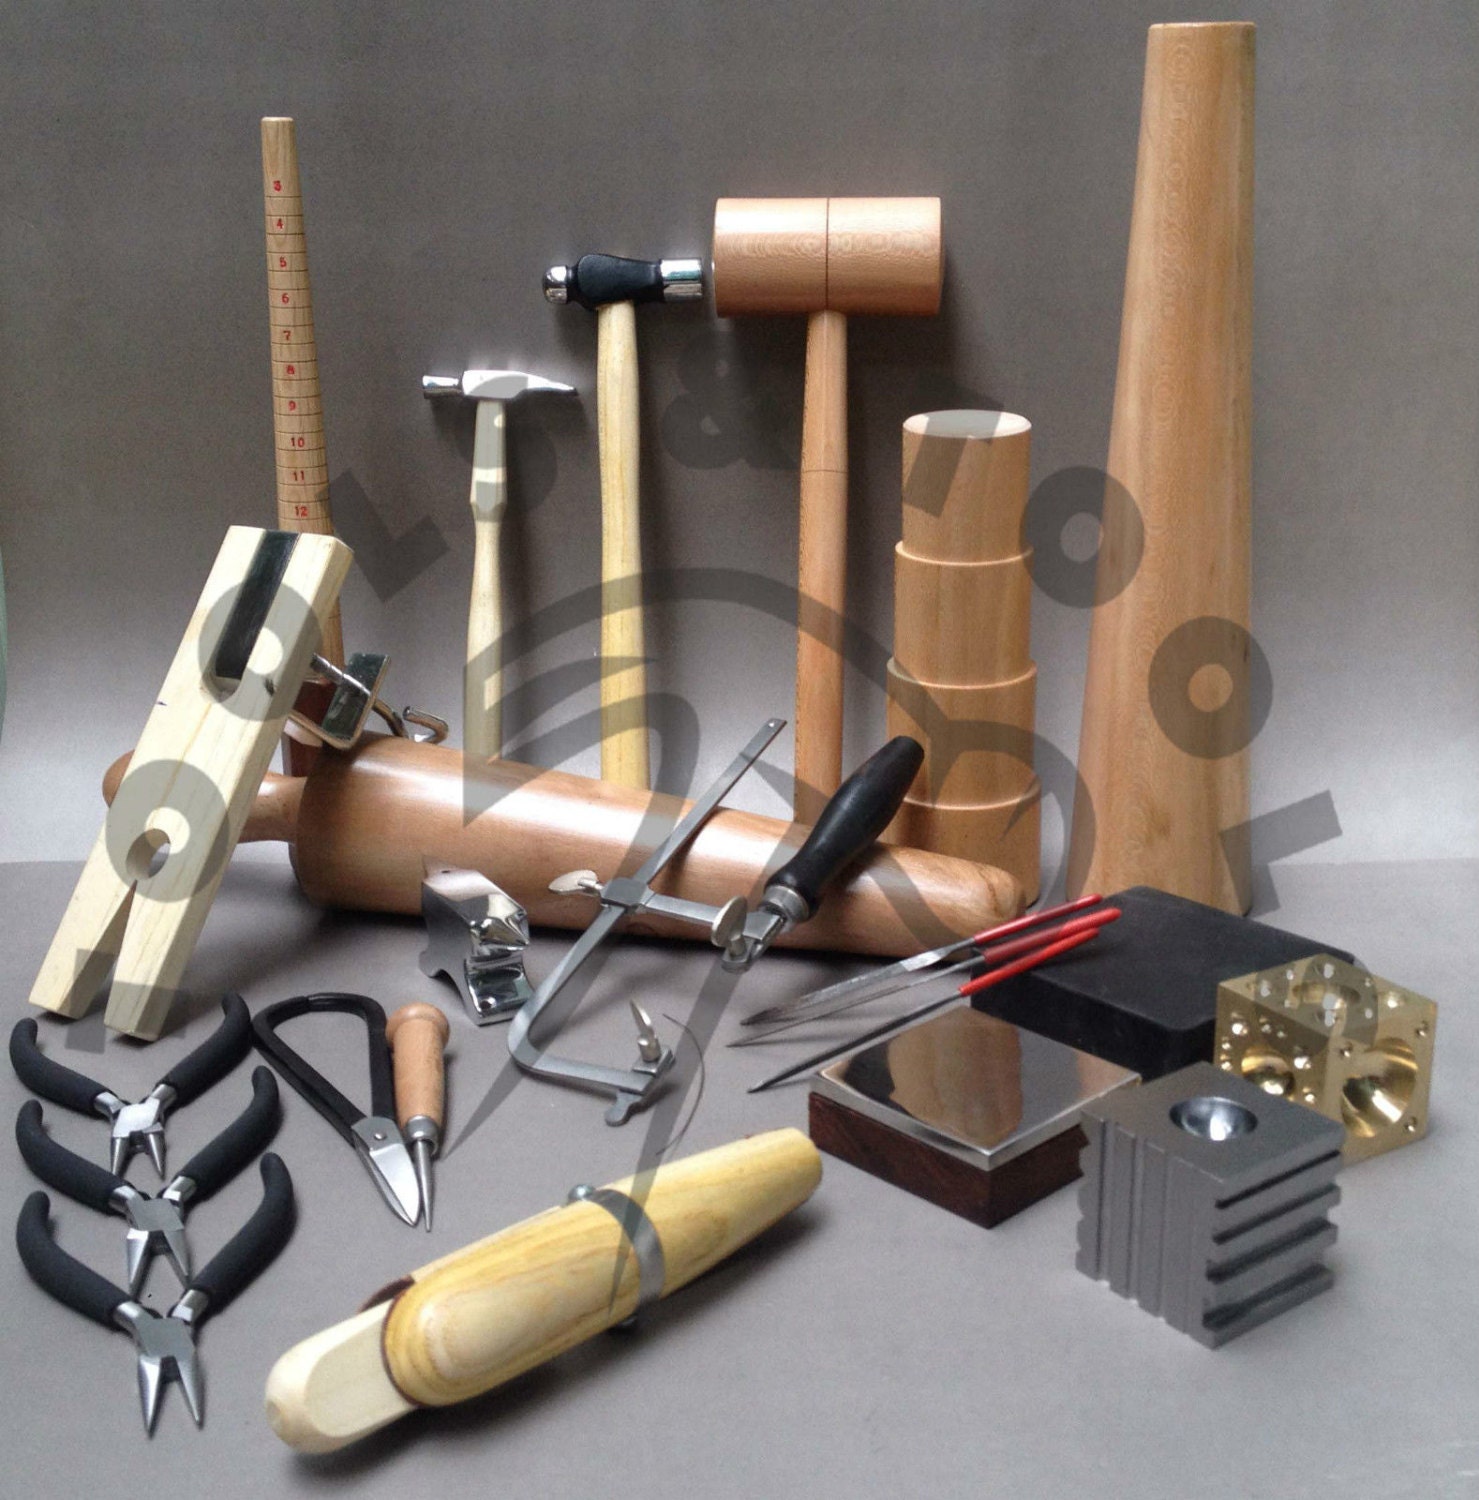 The Loaded Jewellery Tools Kit 25 Tools in 1 Kit Silversmith Tools